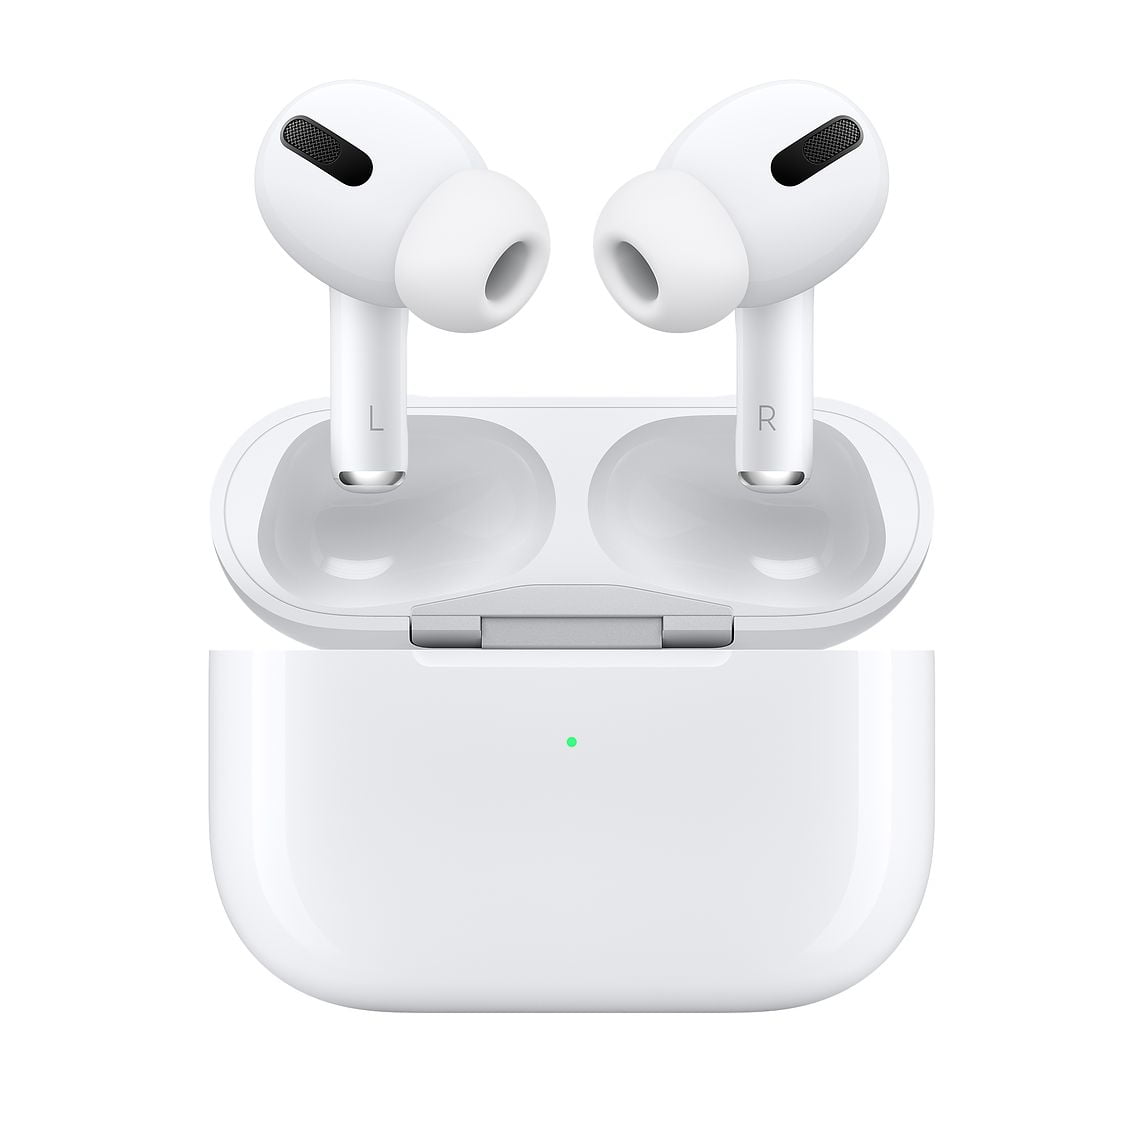 ایرپاد پرو اپل Apple airpod pro